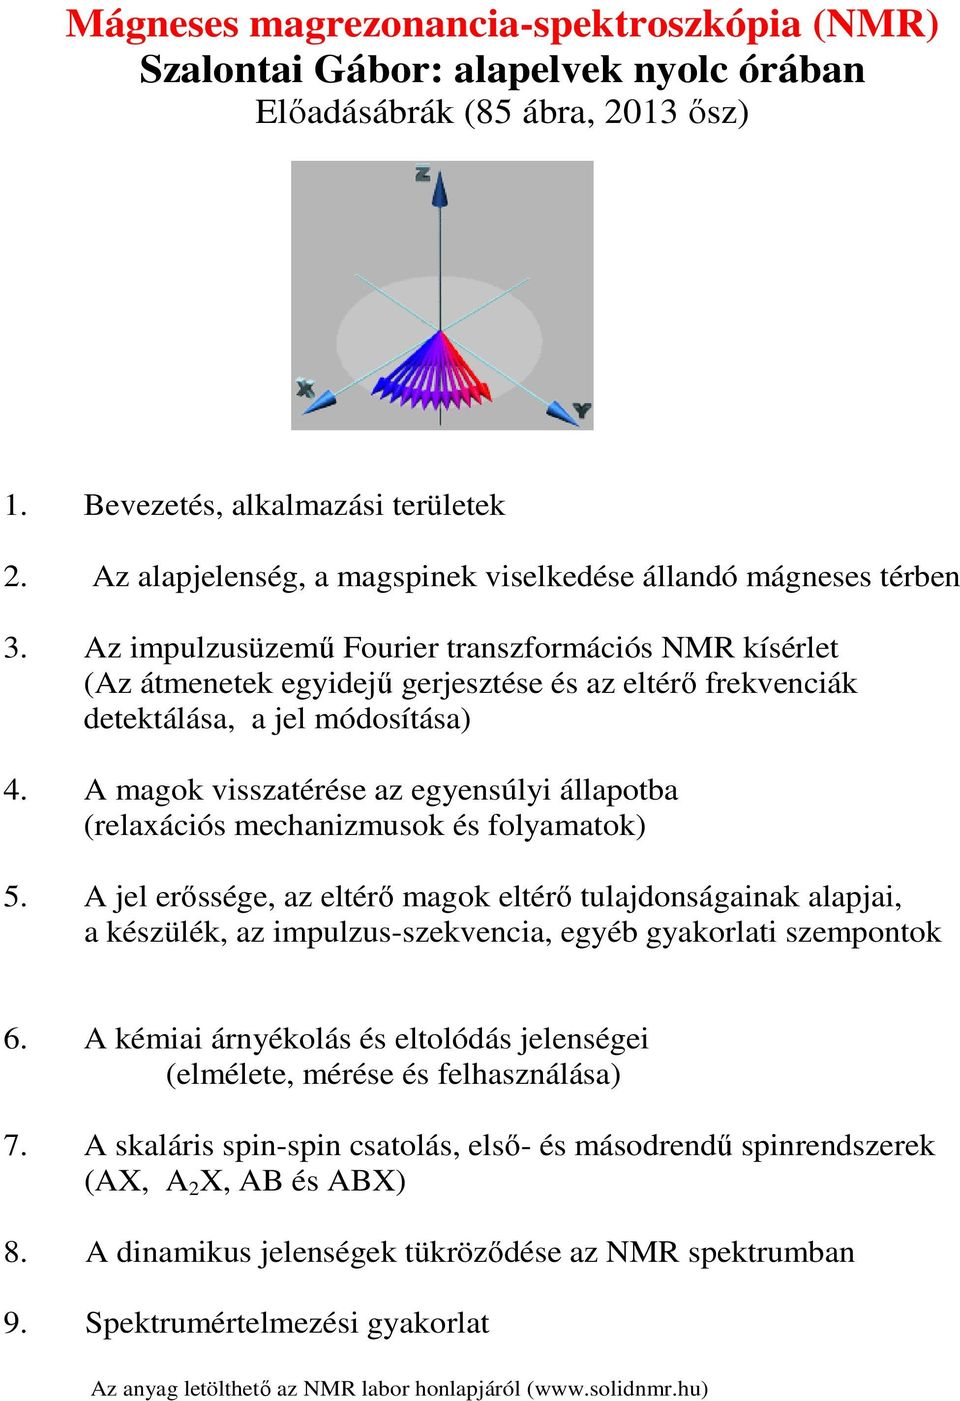 Mágneses magrezonancia-spektroszkópia (NMR) Szalontai Gábor: alapelvek  nyolc órában - PDF Free Download